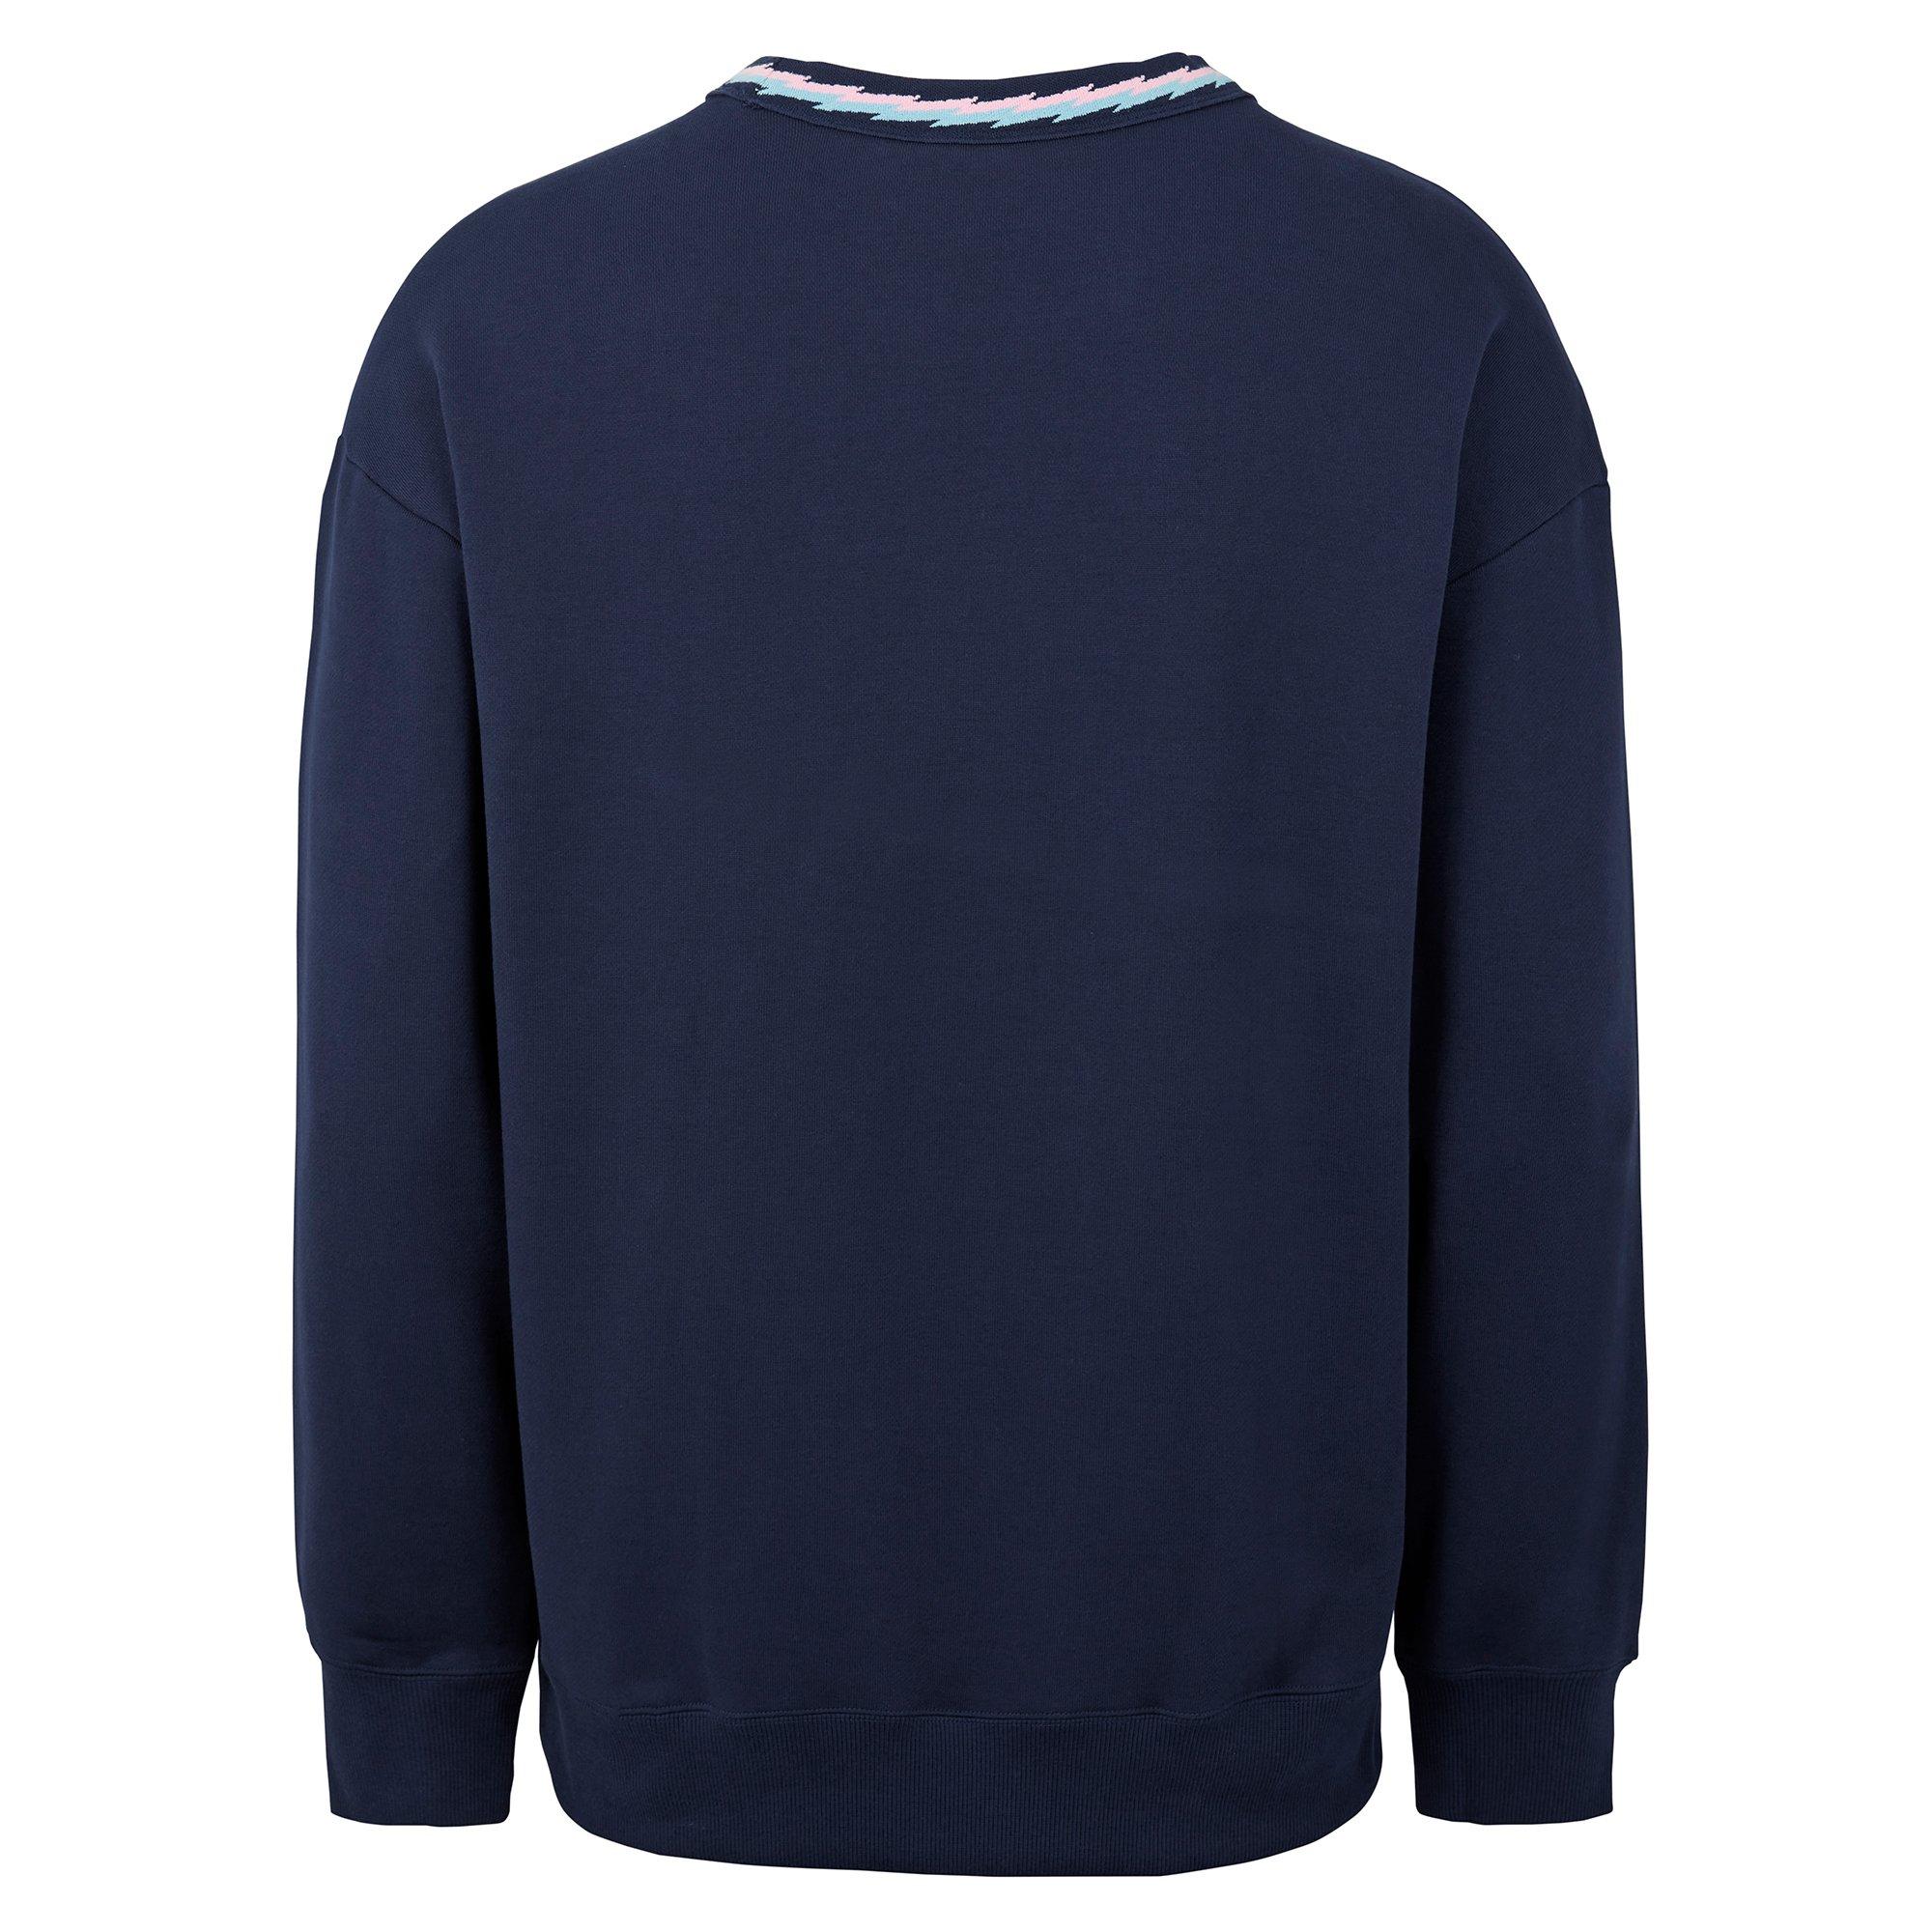 Arsenal Lifestyler Sweatshirt | Official Online Store